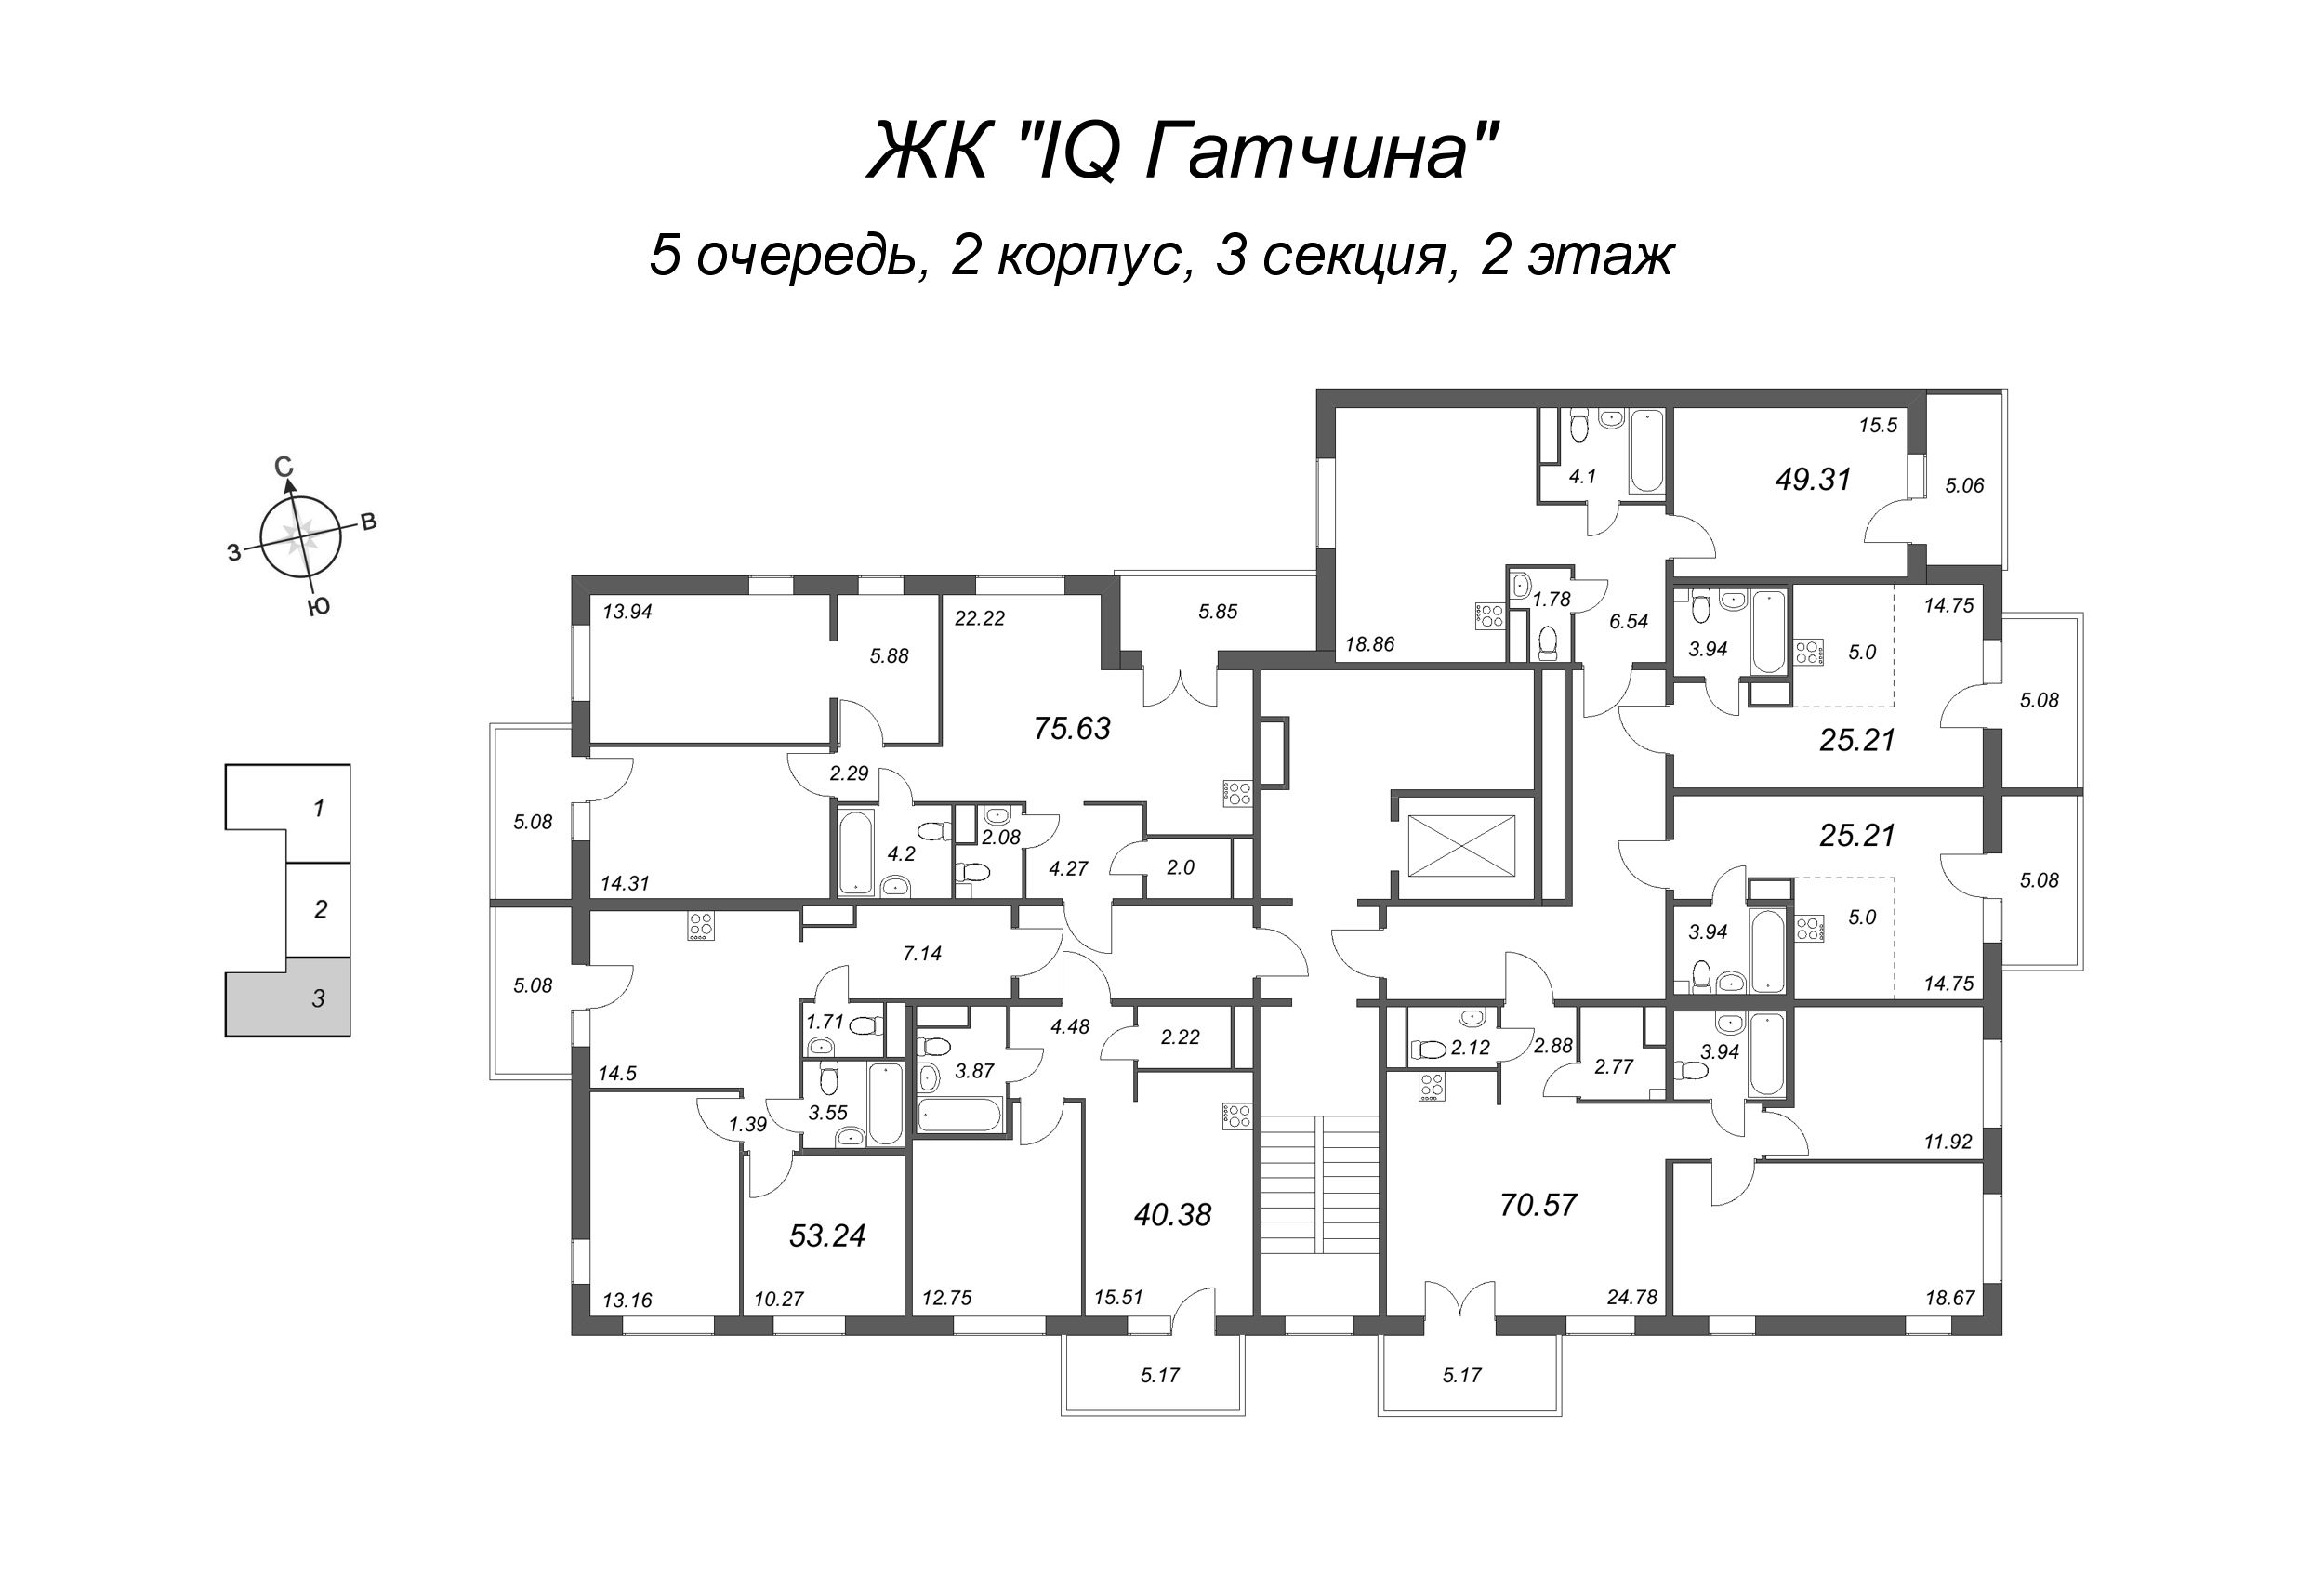 3-комнатная (Евро) квартира, 70.67 м² - планировка этажа